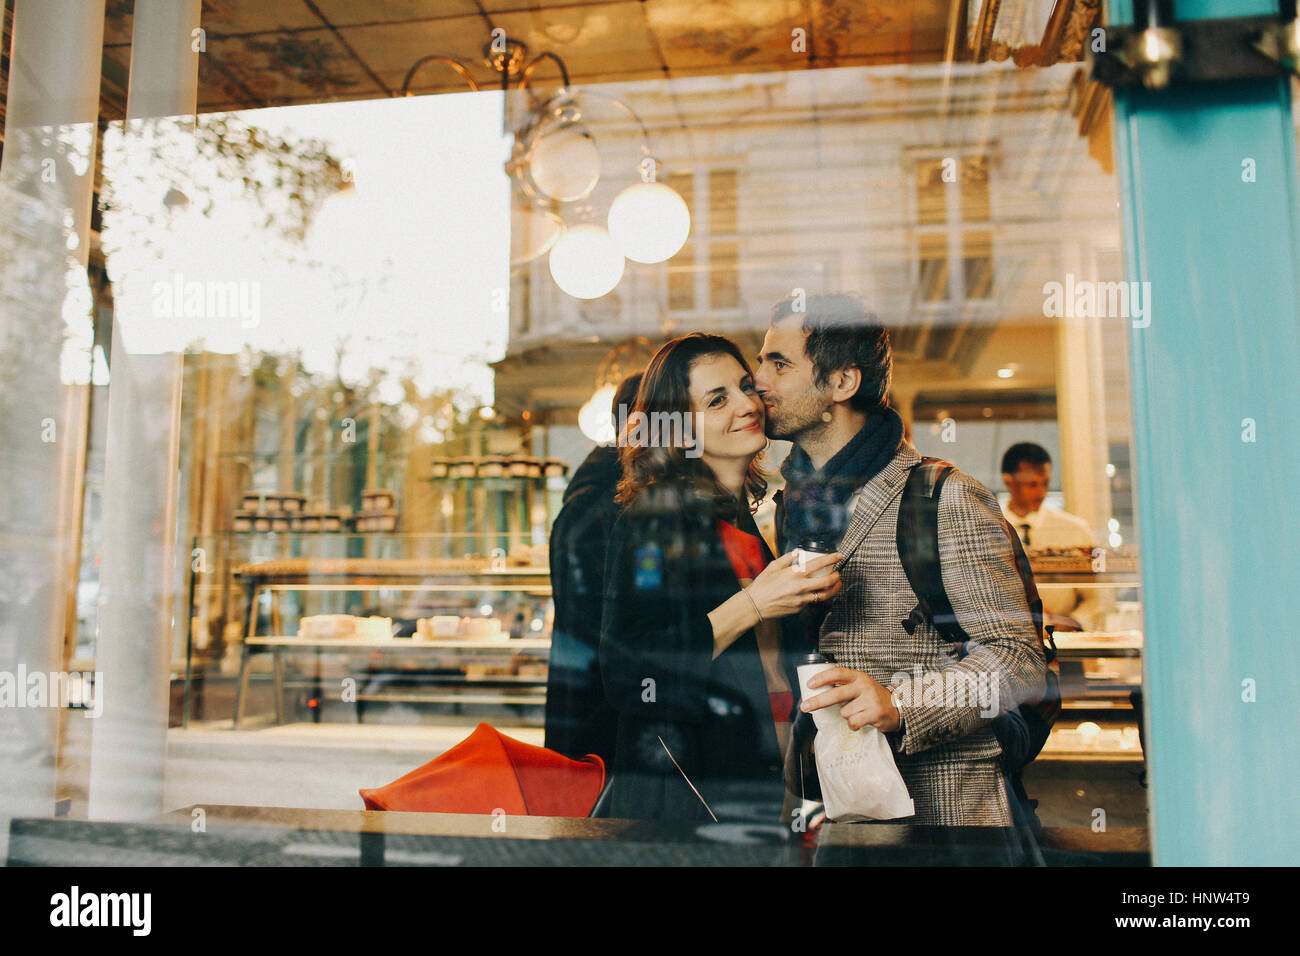 Caucasian man kissing woman on cheek behind bakery window Stock Photo